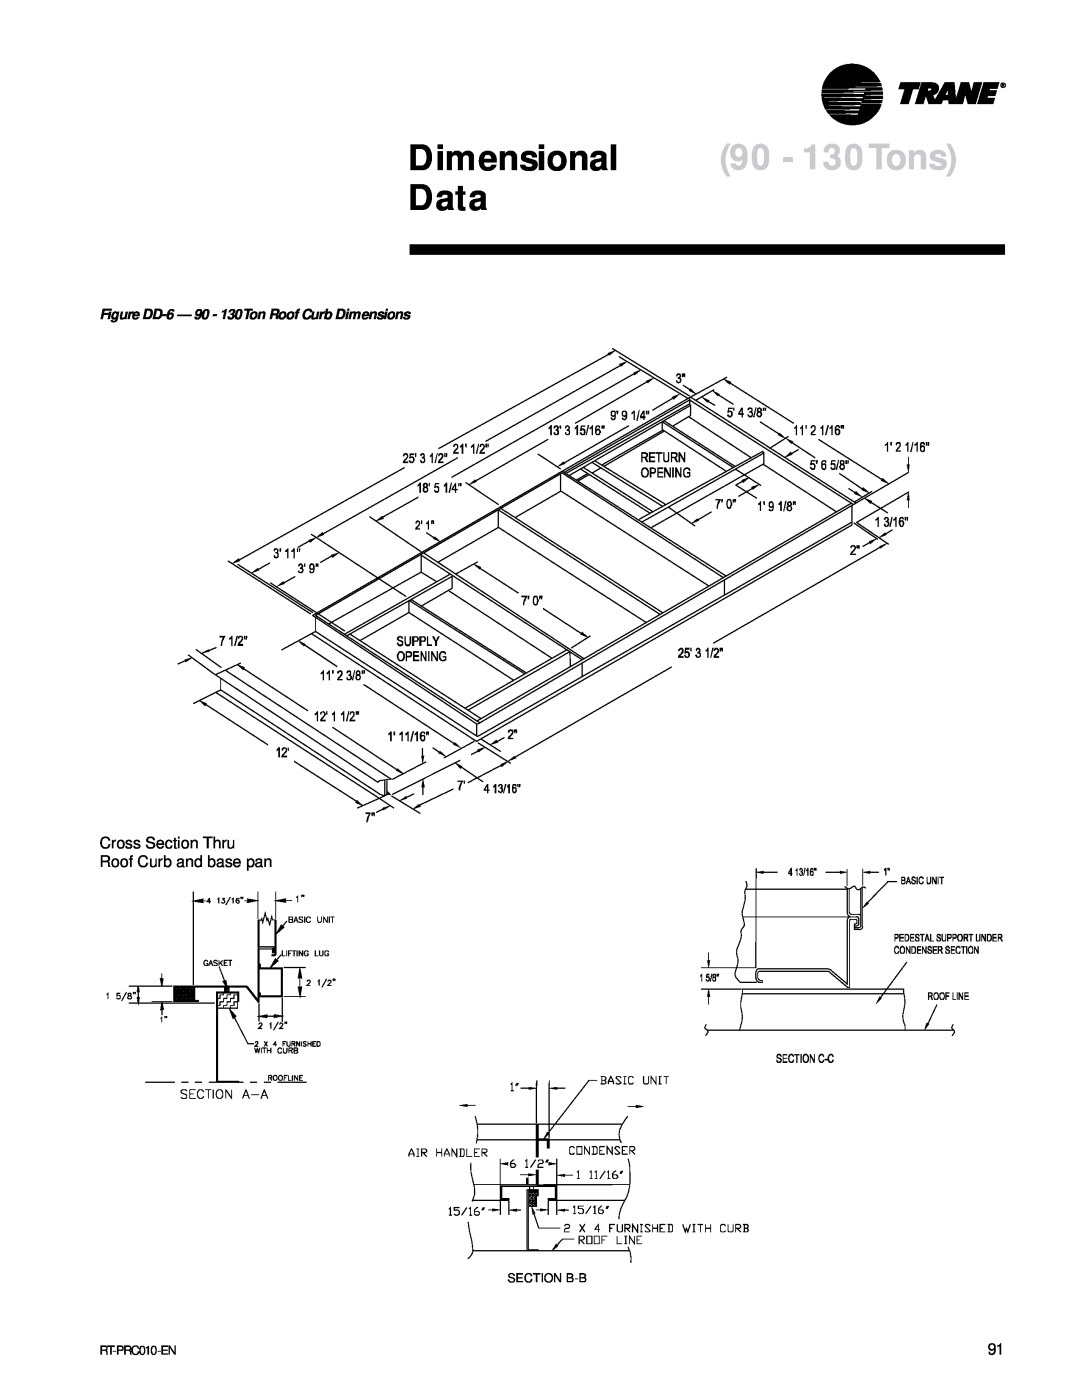 Trane RT-PRC010-EN manual Dimensional 90 - 130Tons, Data, Cross Section Thru Roof Curb and base pan 